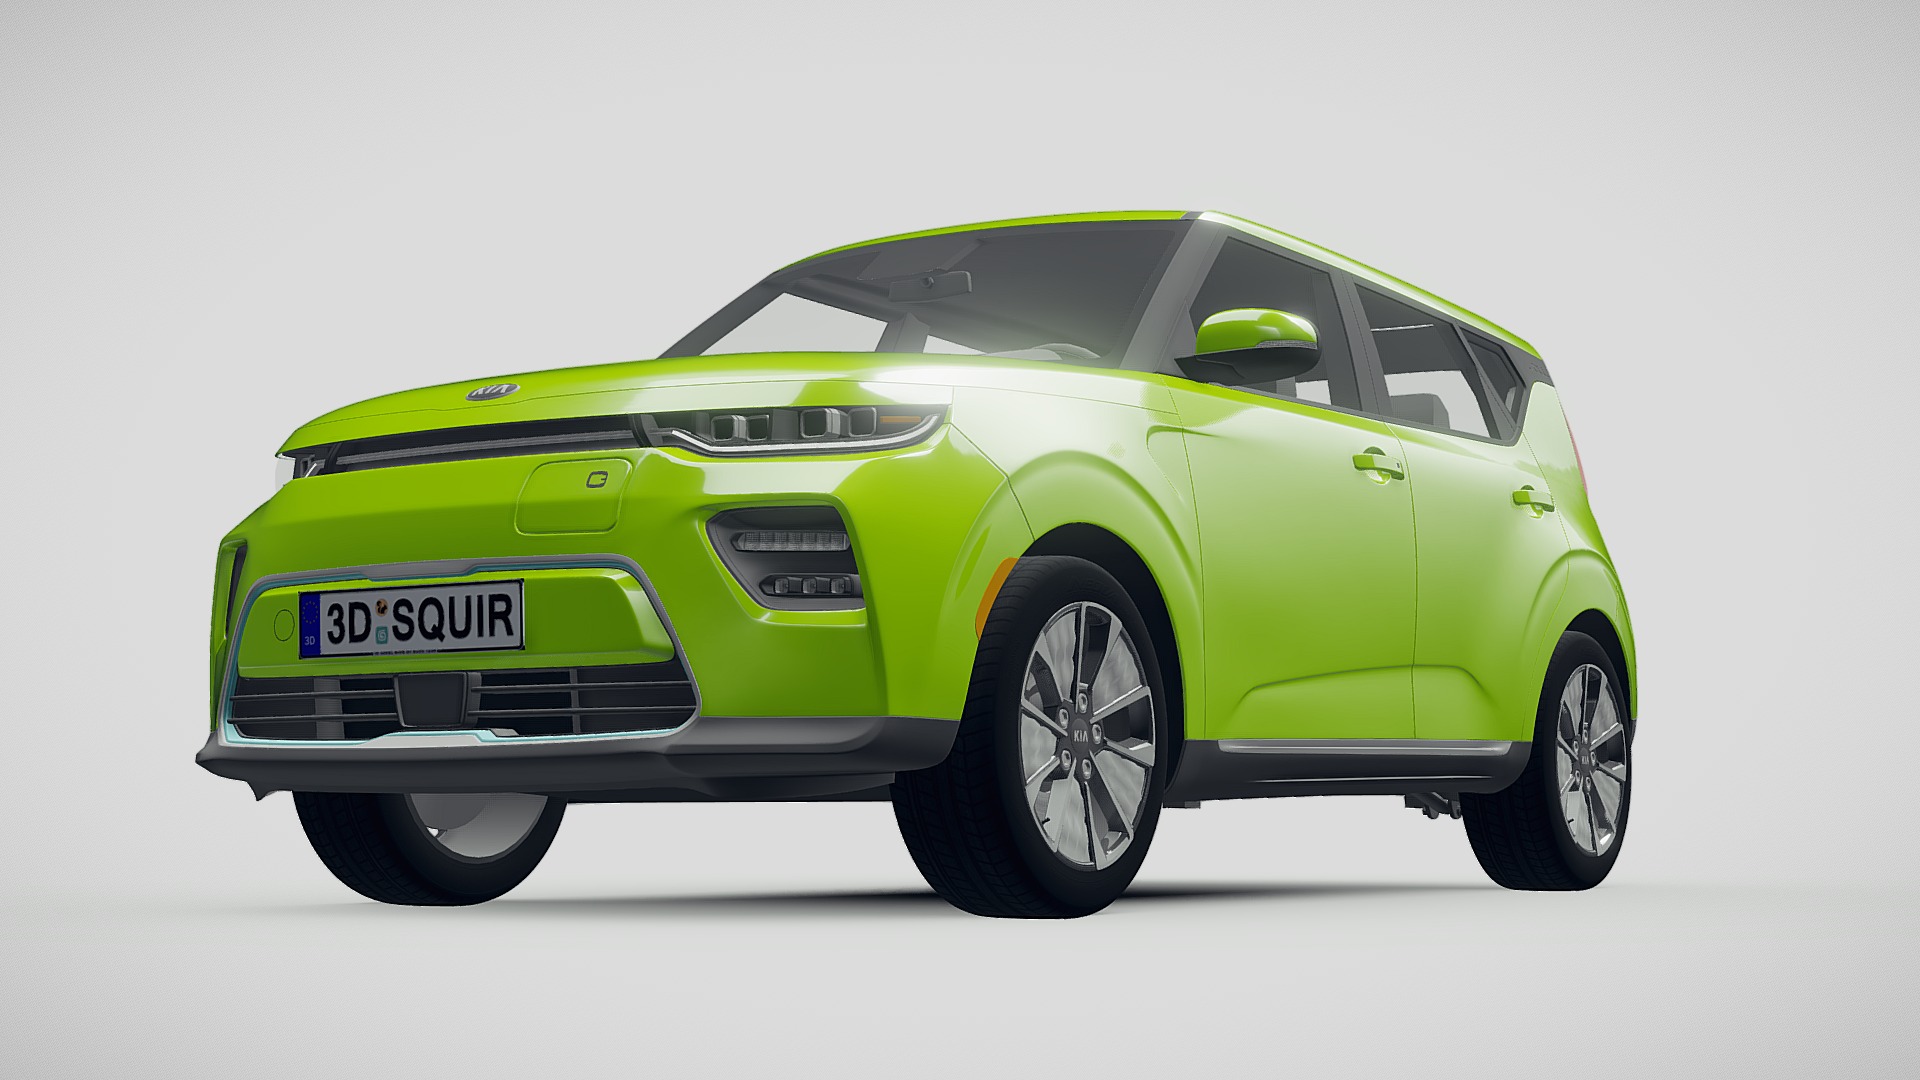 3D model Kia Soul EV 2020 - This is a 3D model of the Kia Soul EV 2020. The 3D model is about a green car with black wheels.